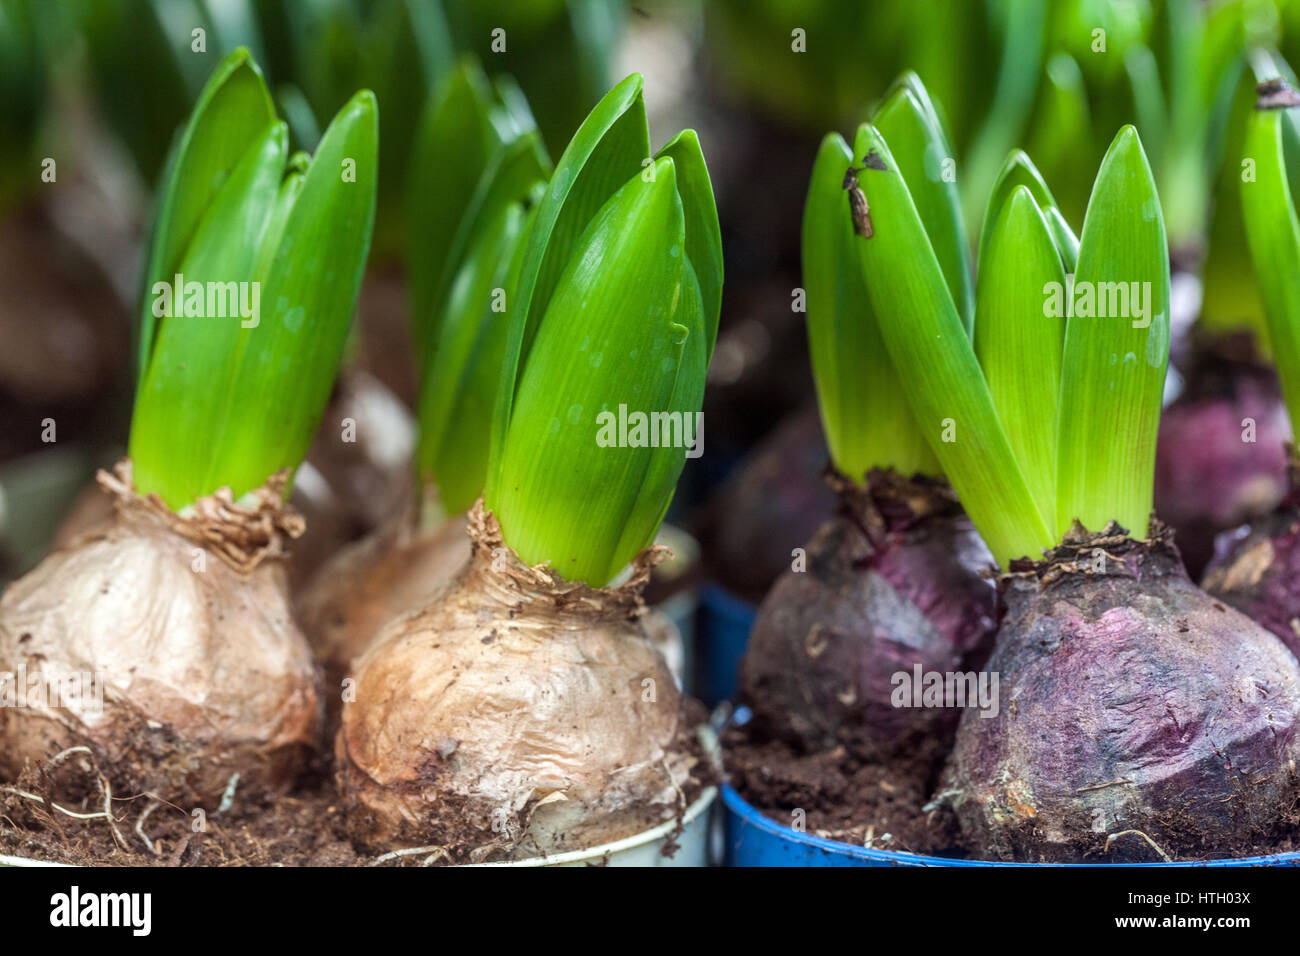 Bulbos de jacinto fotografías e imágenes de alta resolución - Alamy